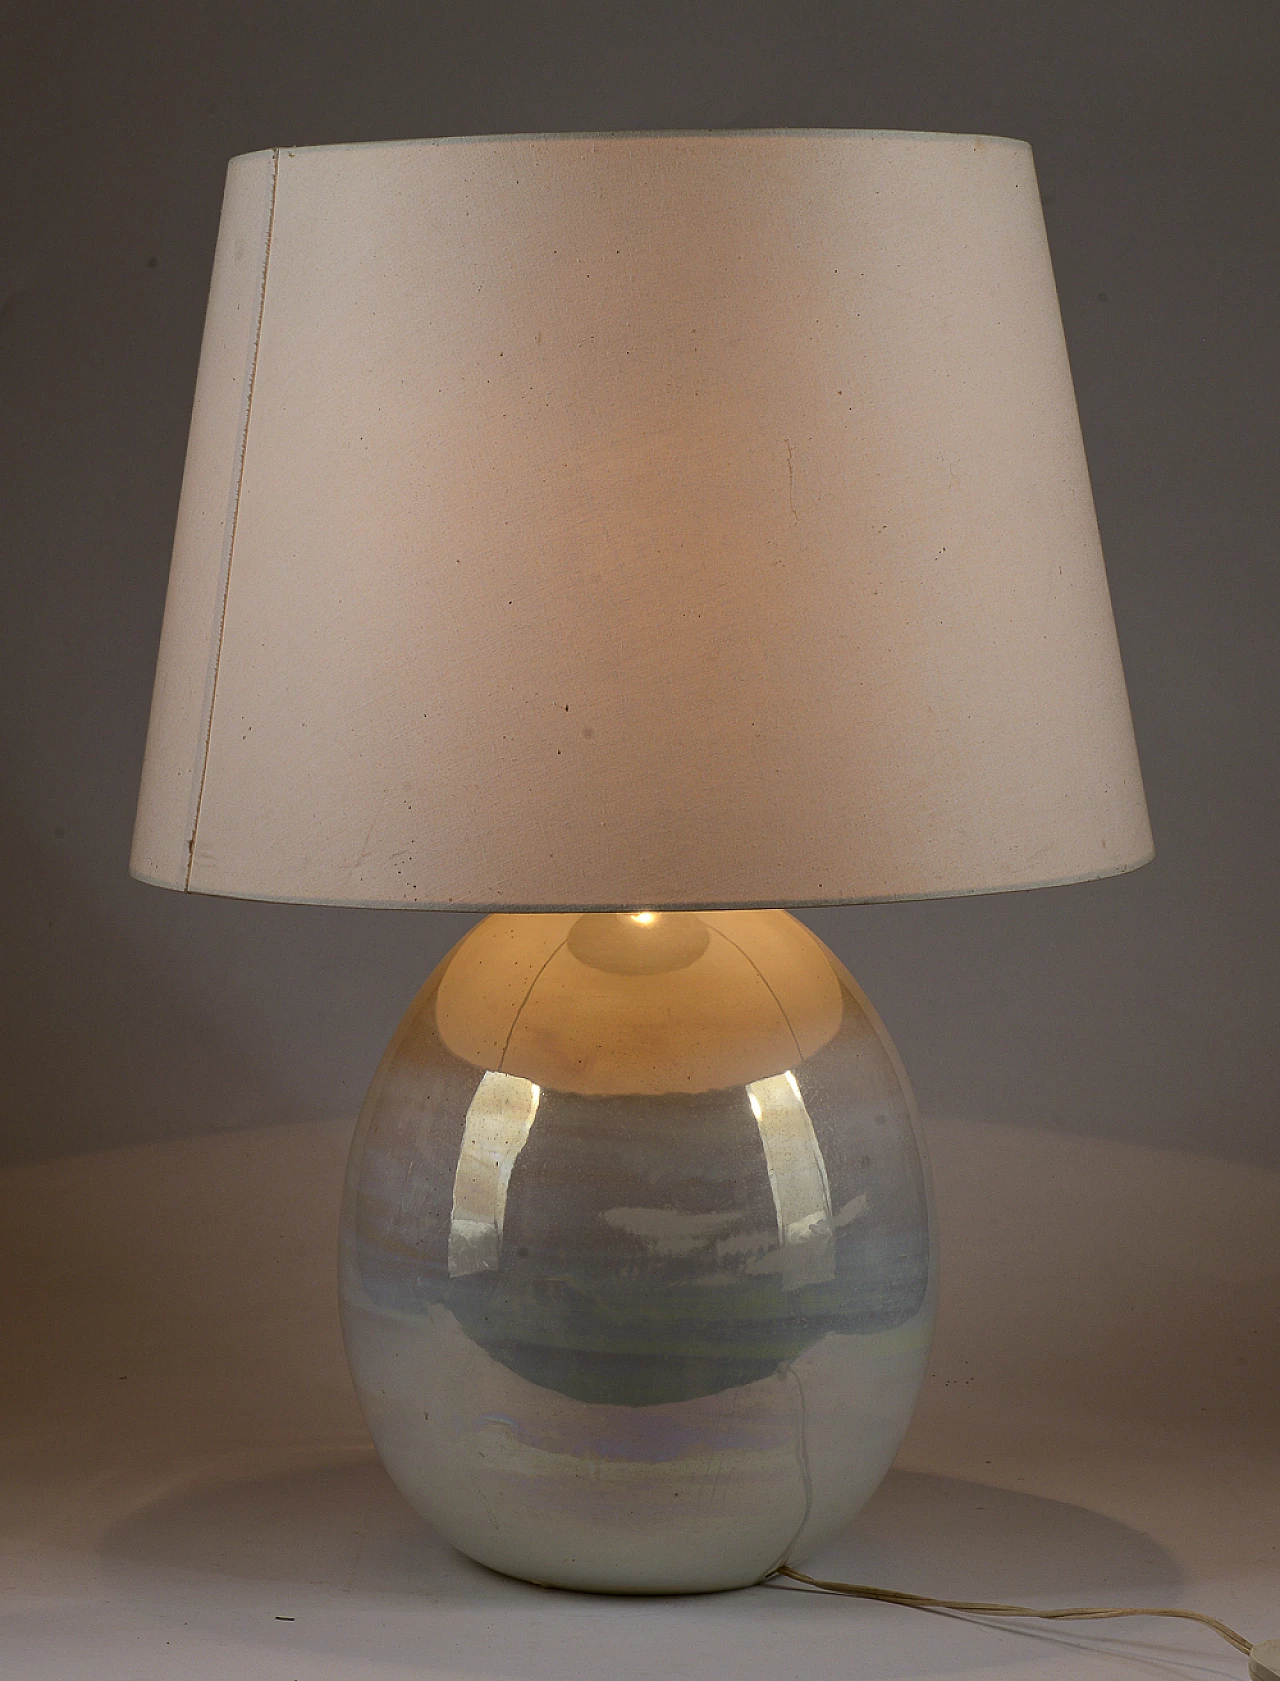 Lampada da tavolo in ceramica perlata bianca cangiante invetriata iridescente, anni '80 2